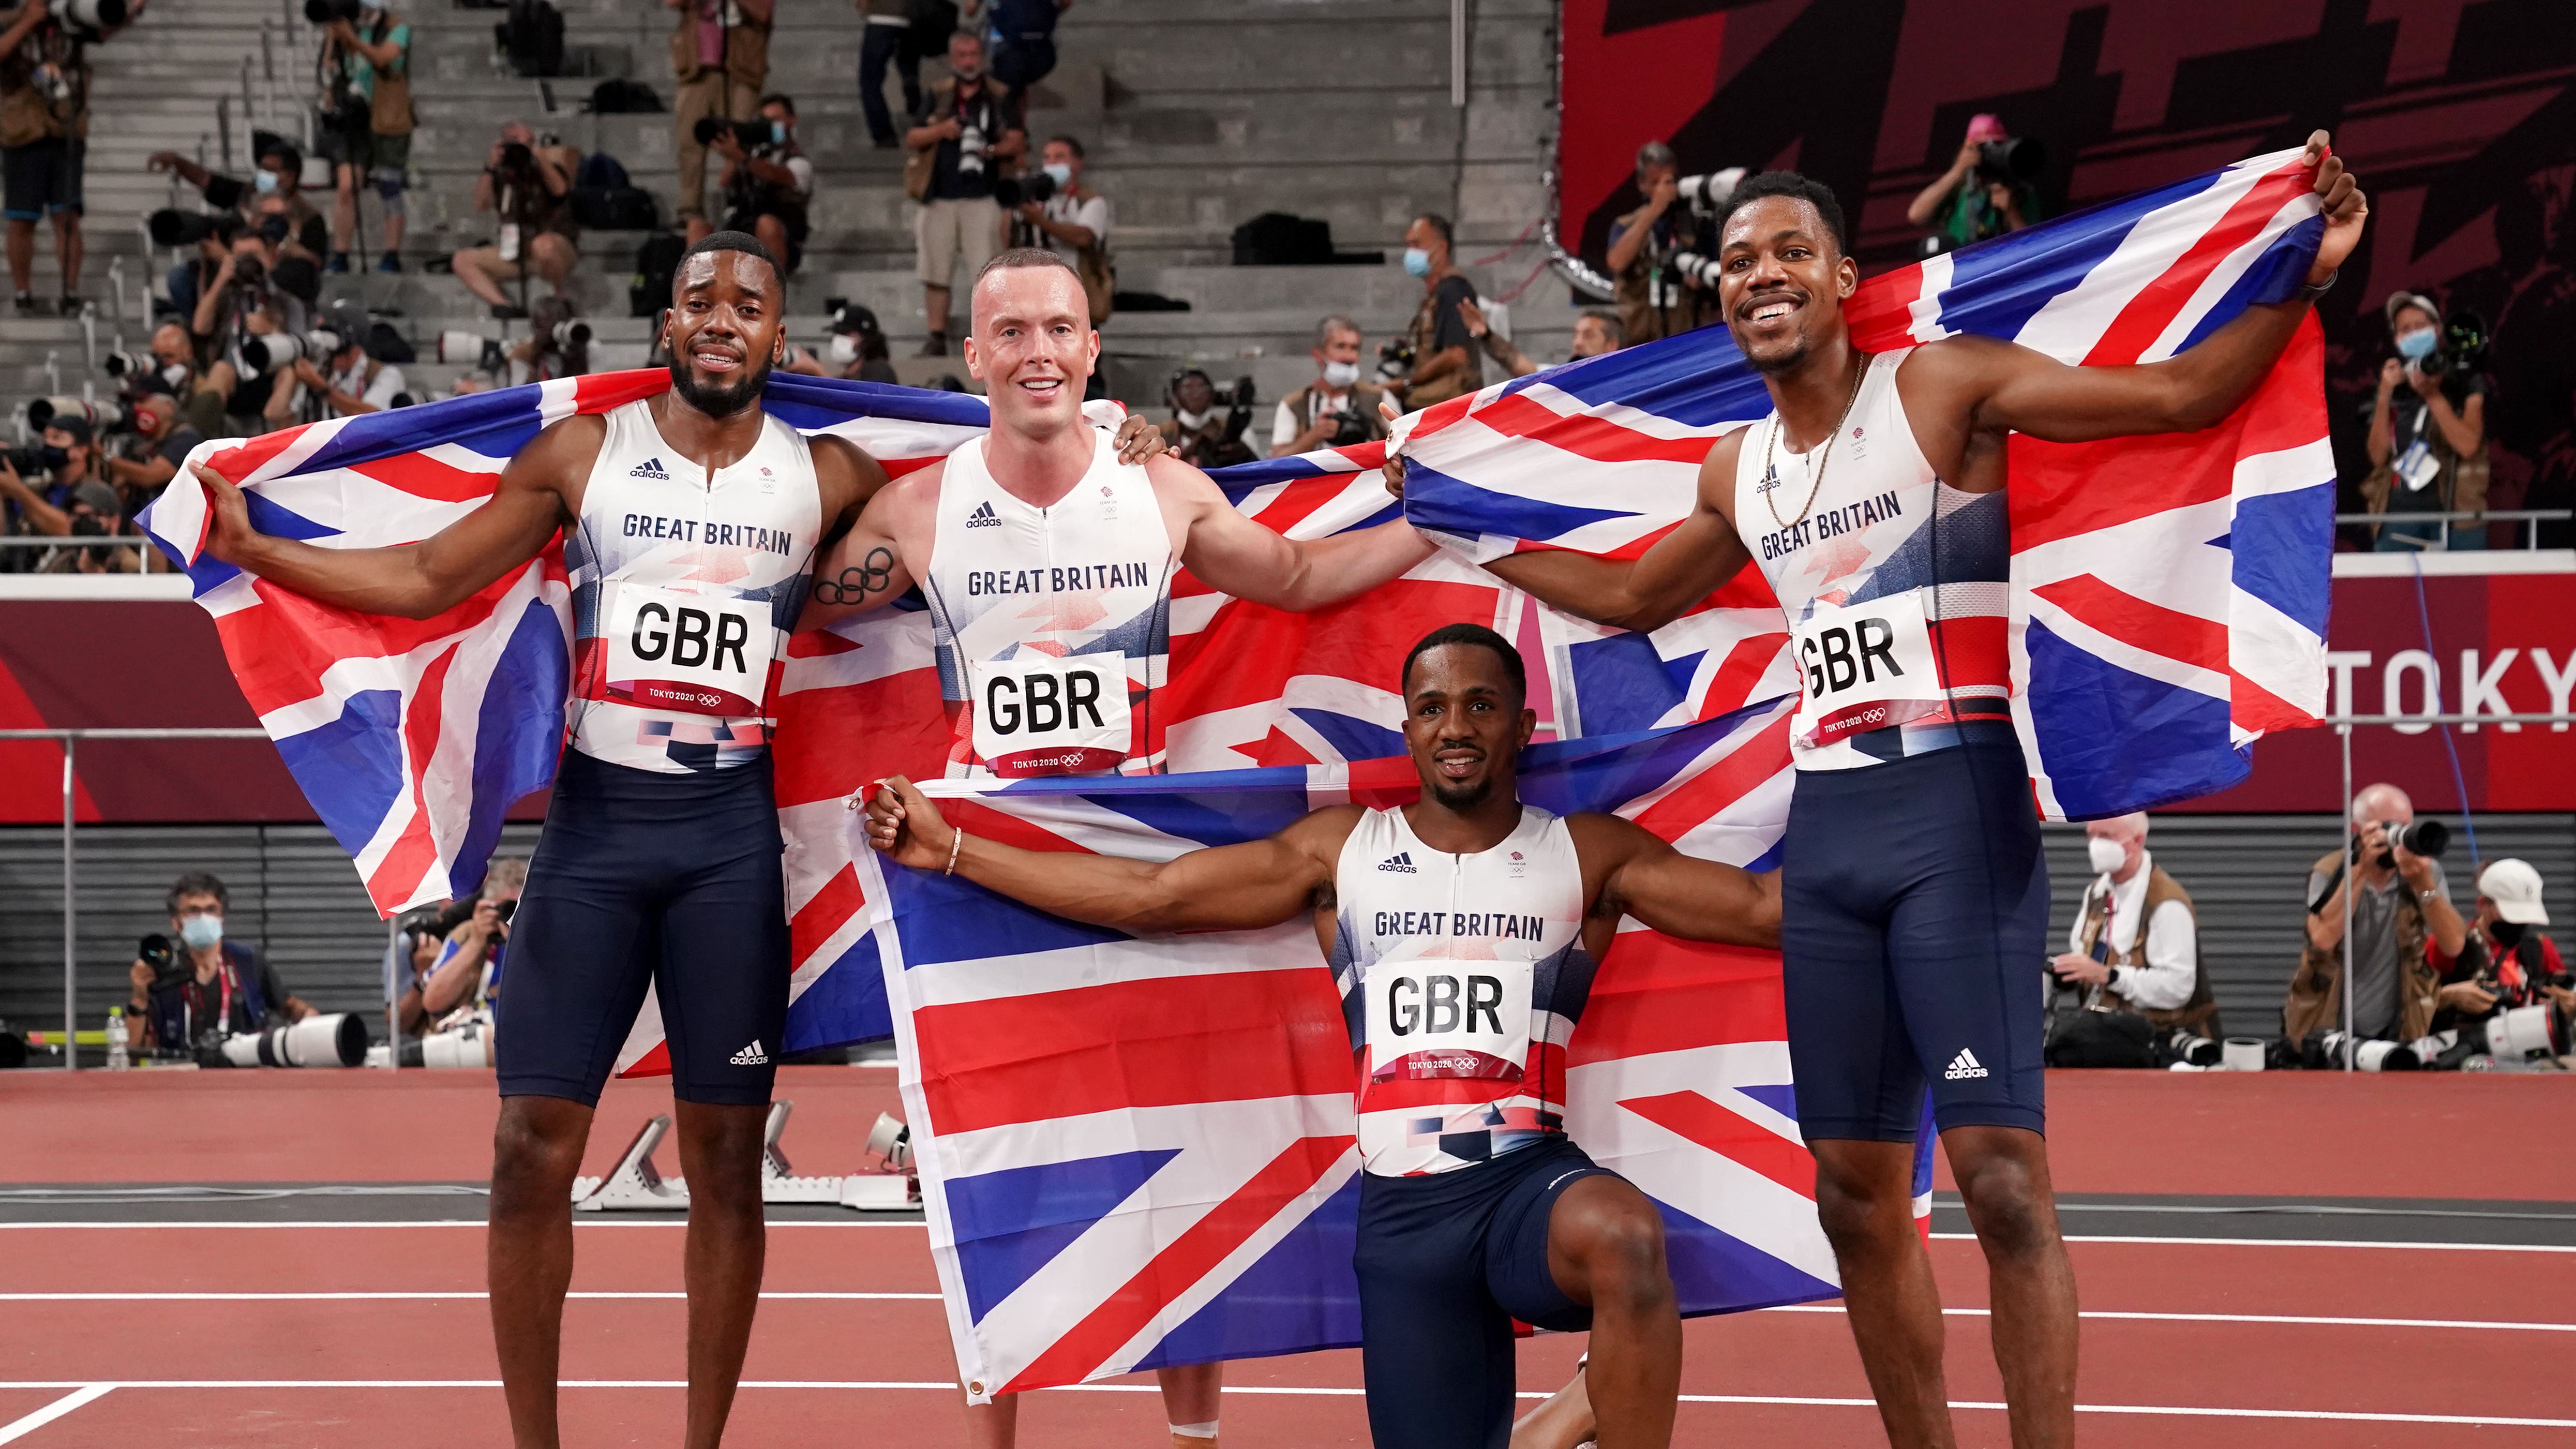 Team GB stripped of Olympic 4x100m relay silver over CJ Ujah doping violati...